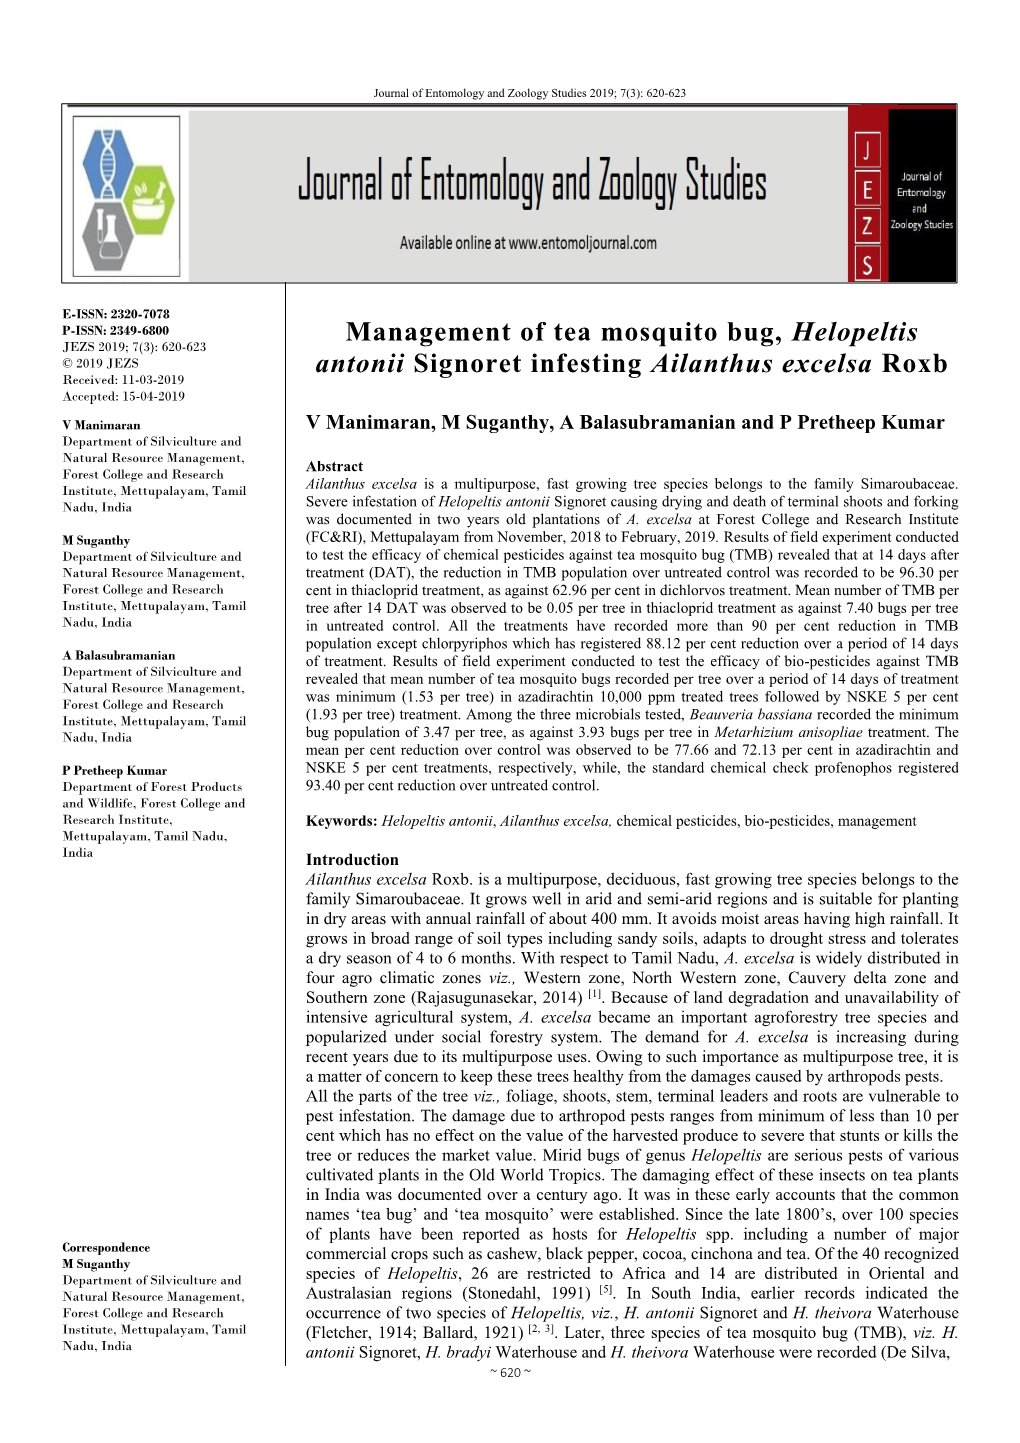 Management of Tea Mosquito Bug, Helopeltis Antonii Signoret Infesting